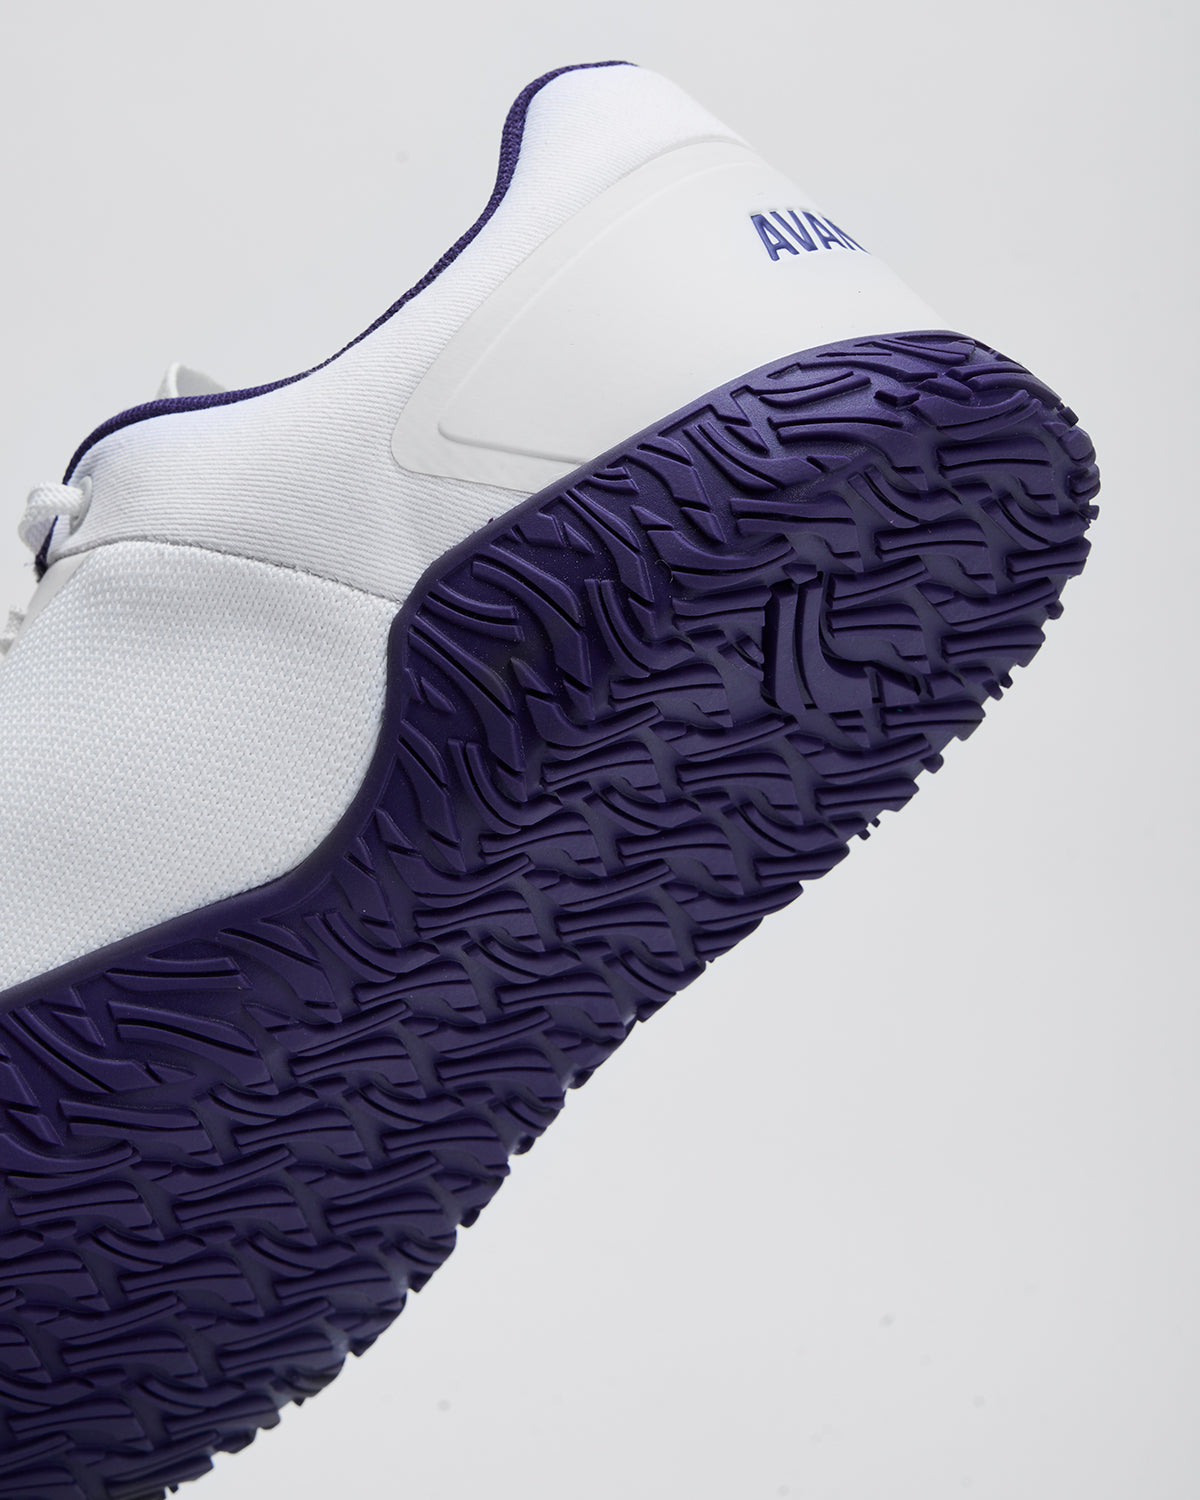 Avancus Apex Power Shoes 1.5 (White/Purple)